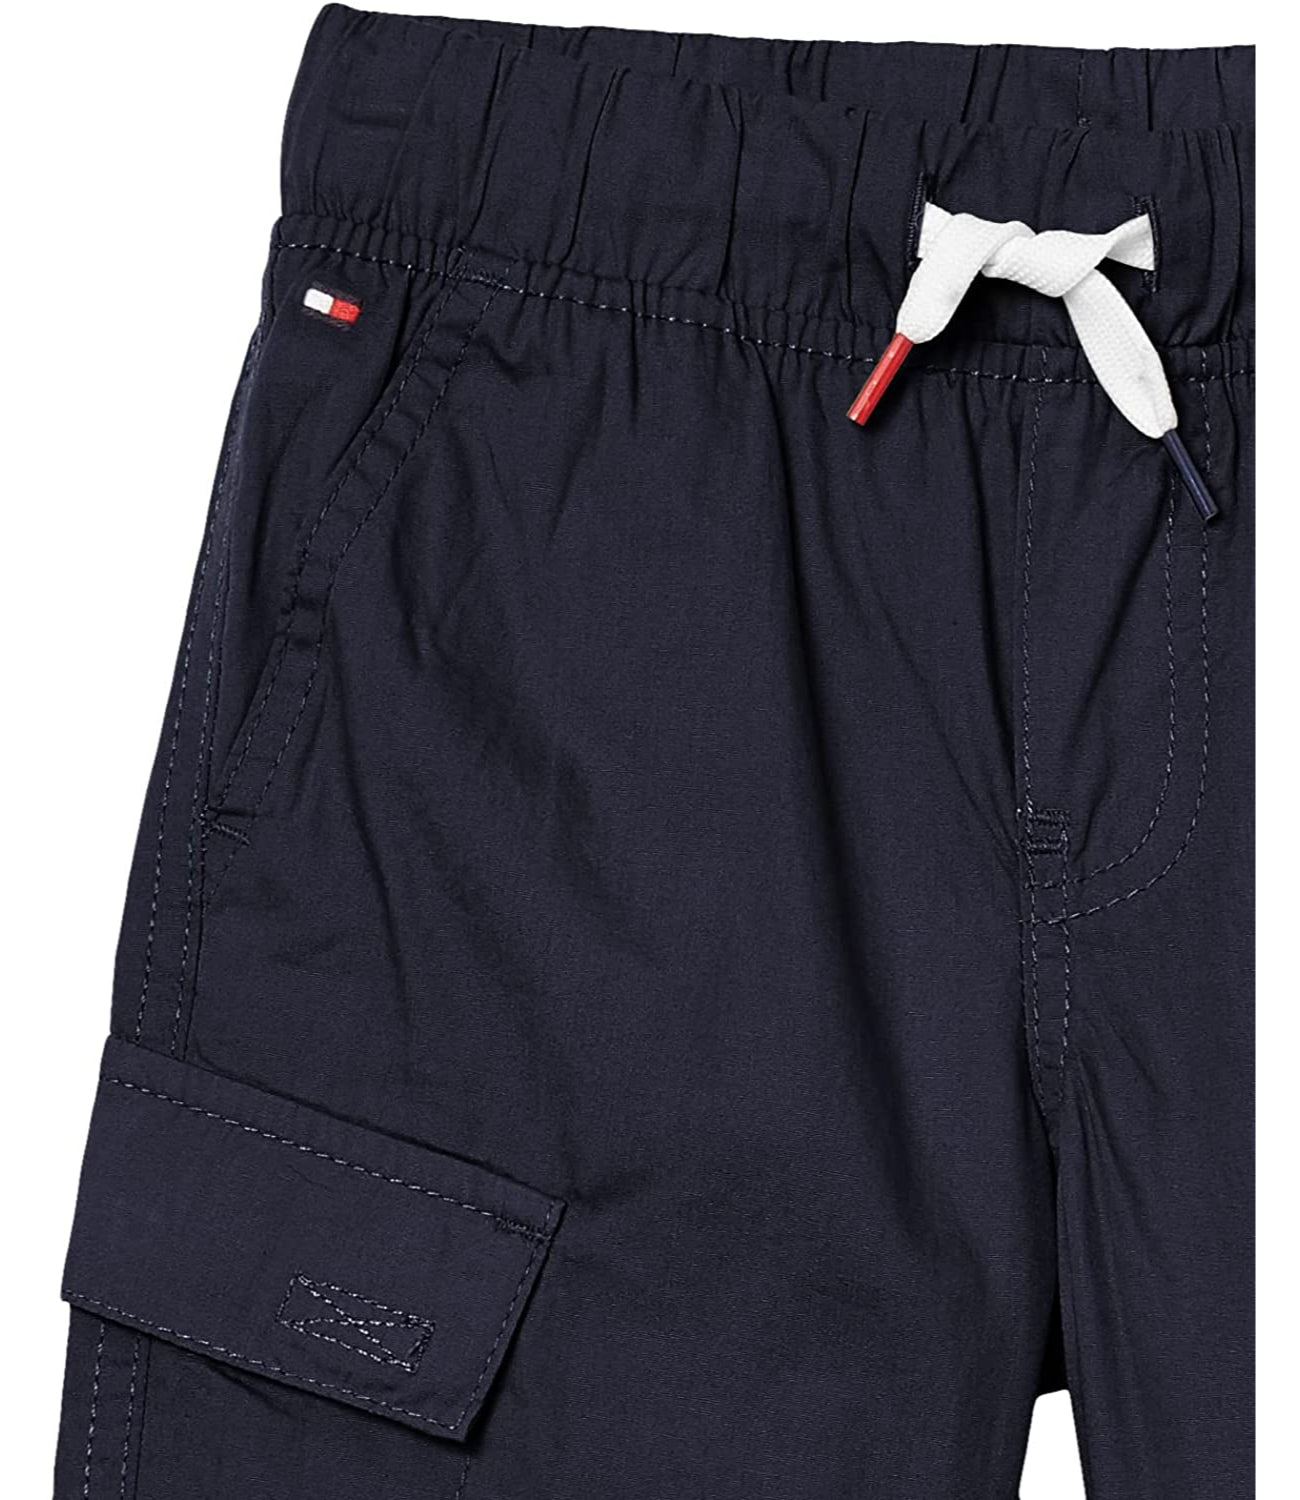 Tommy Hilfiger Boys 8-20 Cargo Woven Shorts